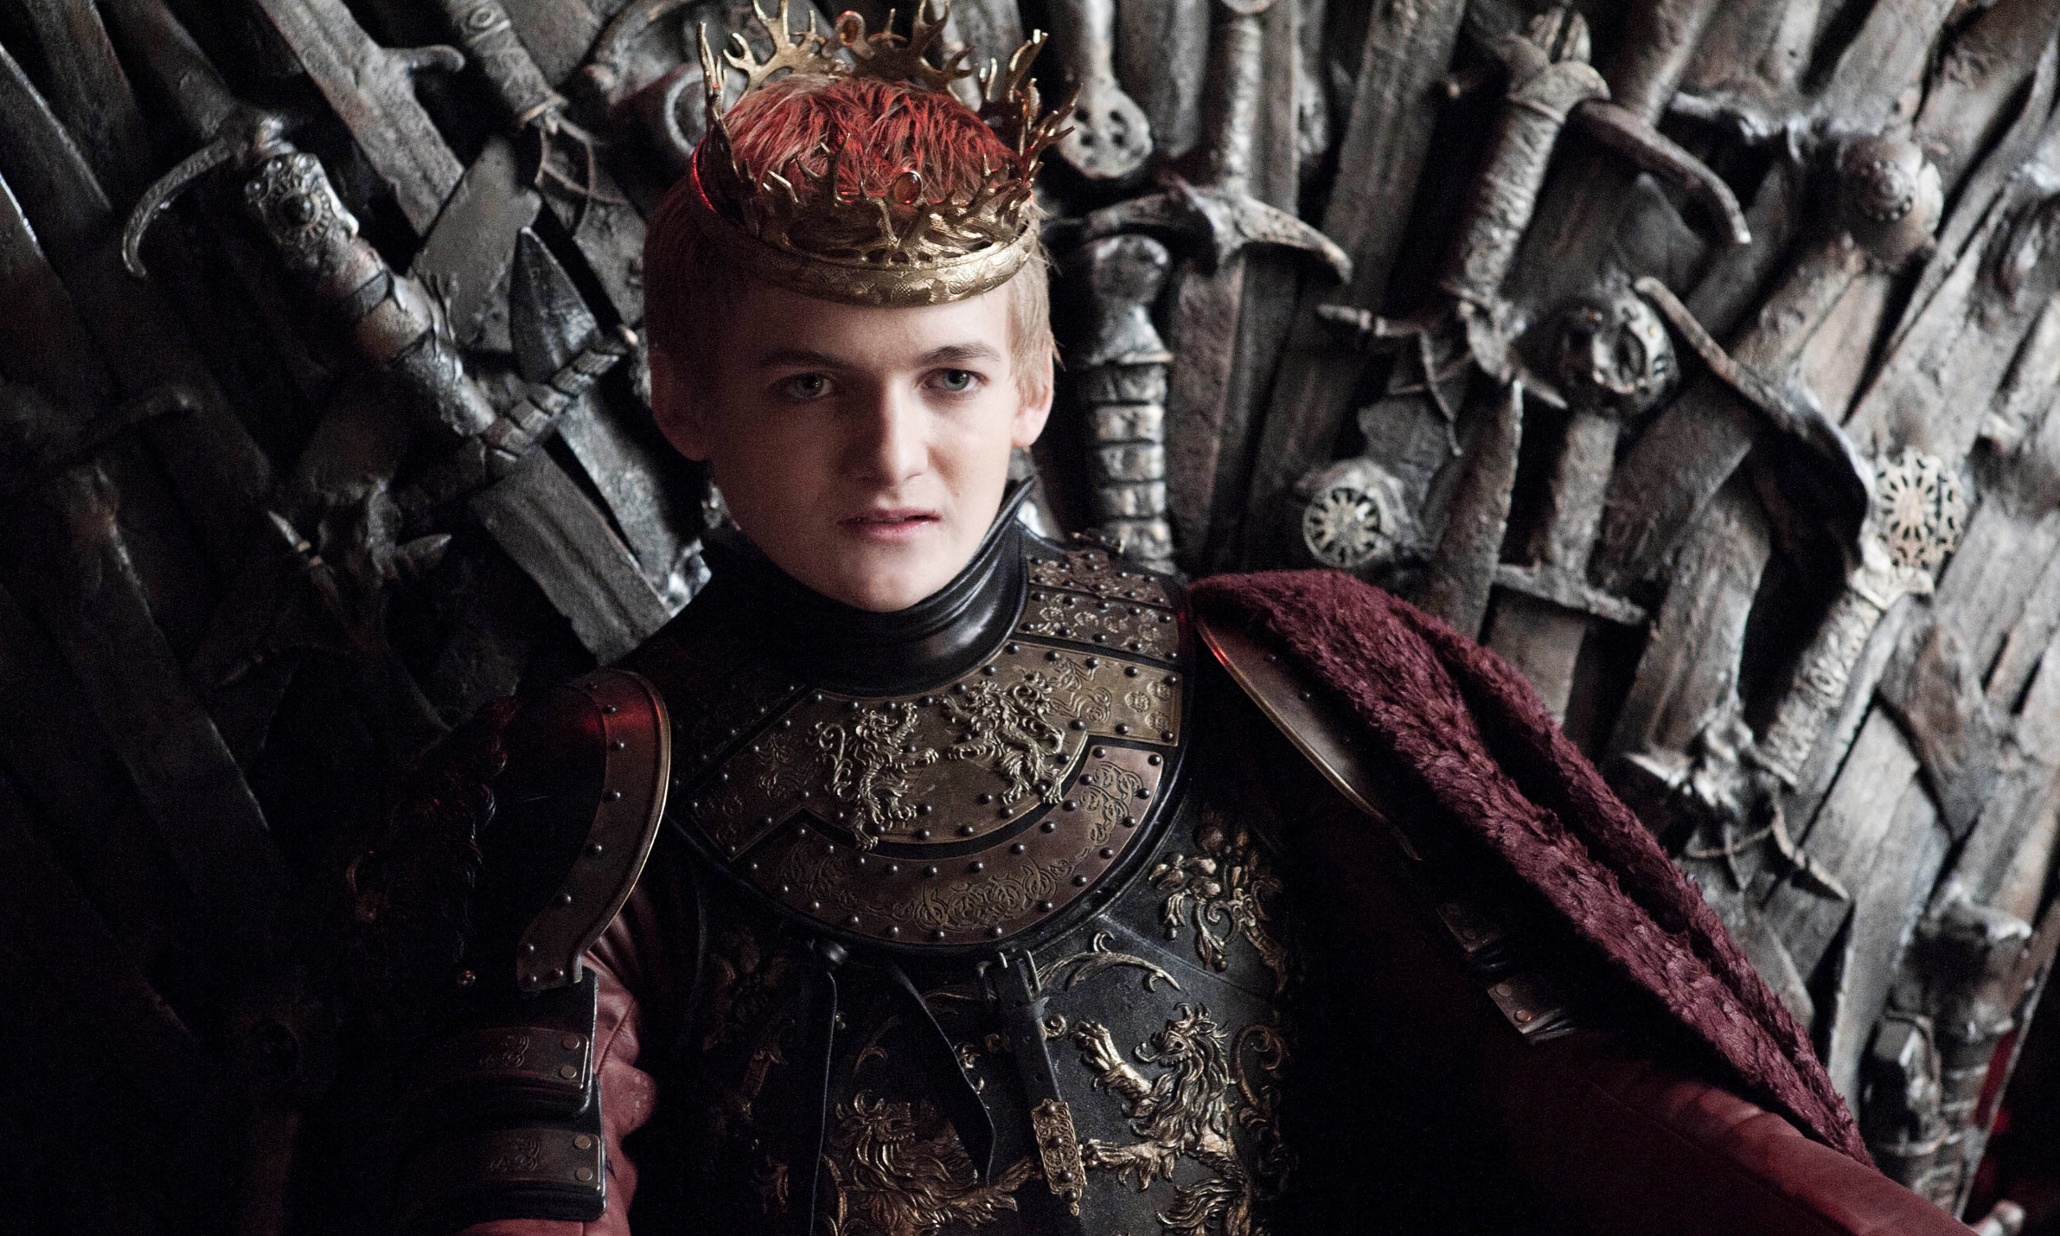 Game of Thrones - Series 02 Episode 10 "Valar Morghulis" Jack Gleeson as Joffrey Baratheon. ©Copyright 2000-2005 Home Box Office Inc